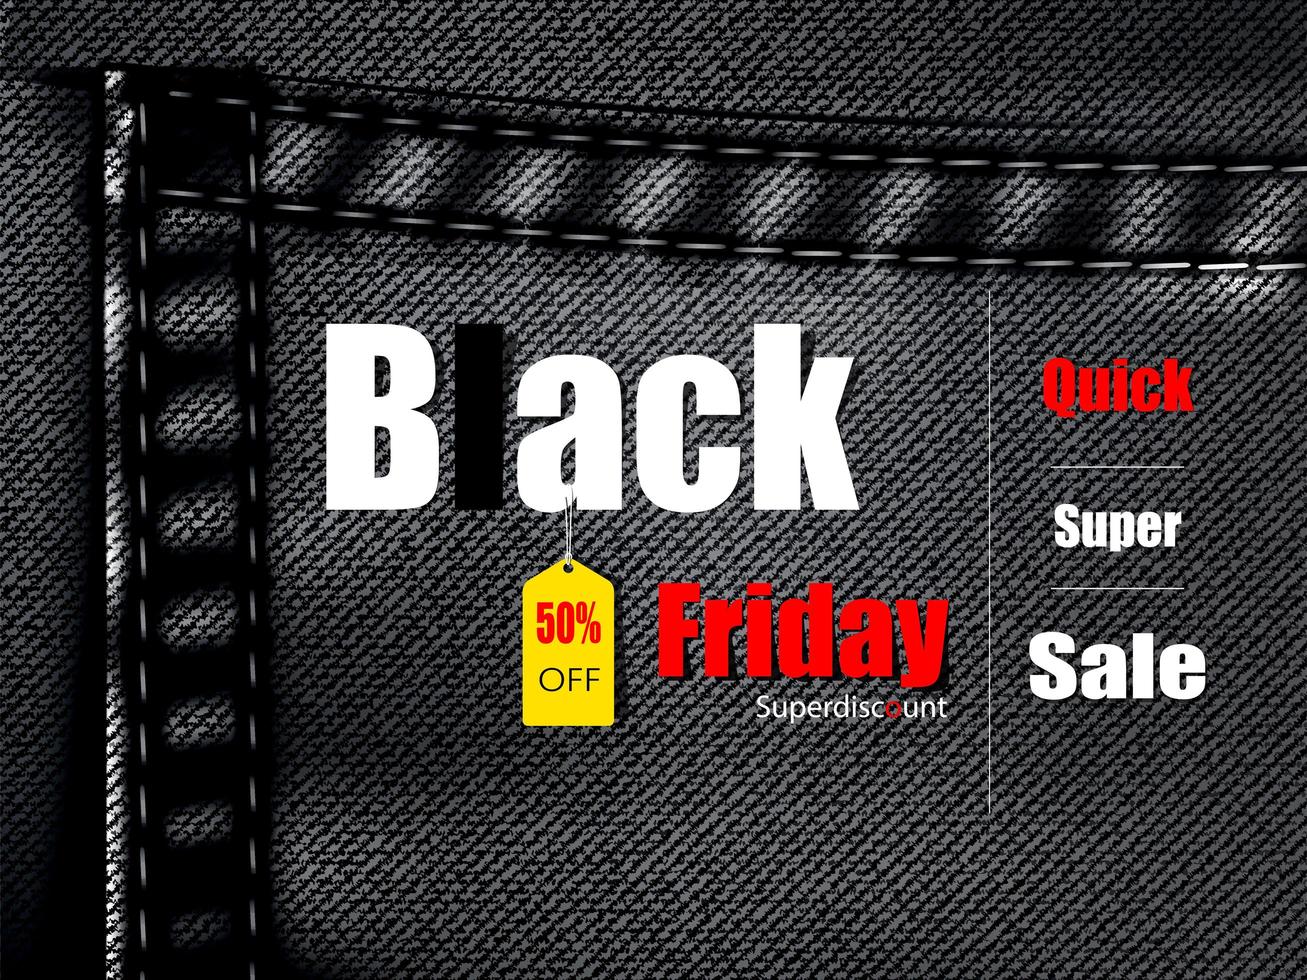 Jean Texture Black Friday Bale Banner vector